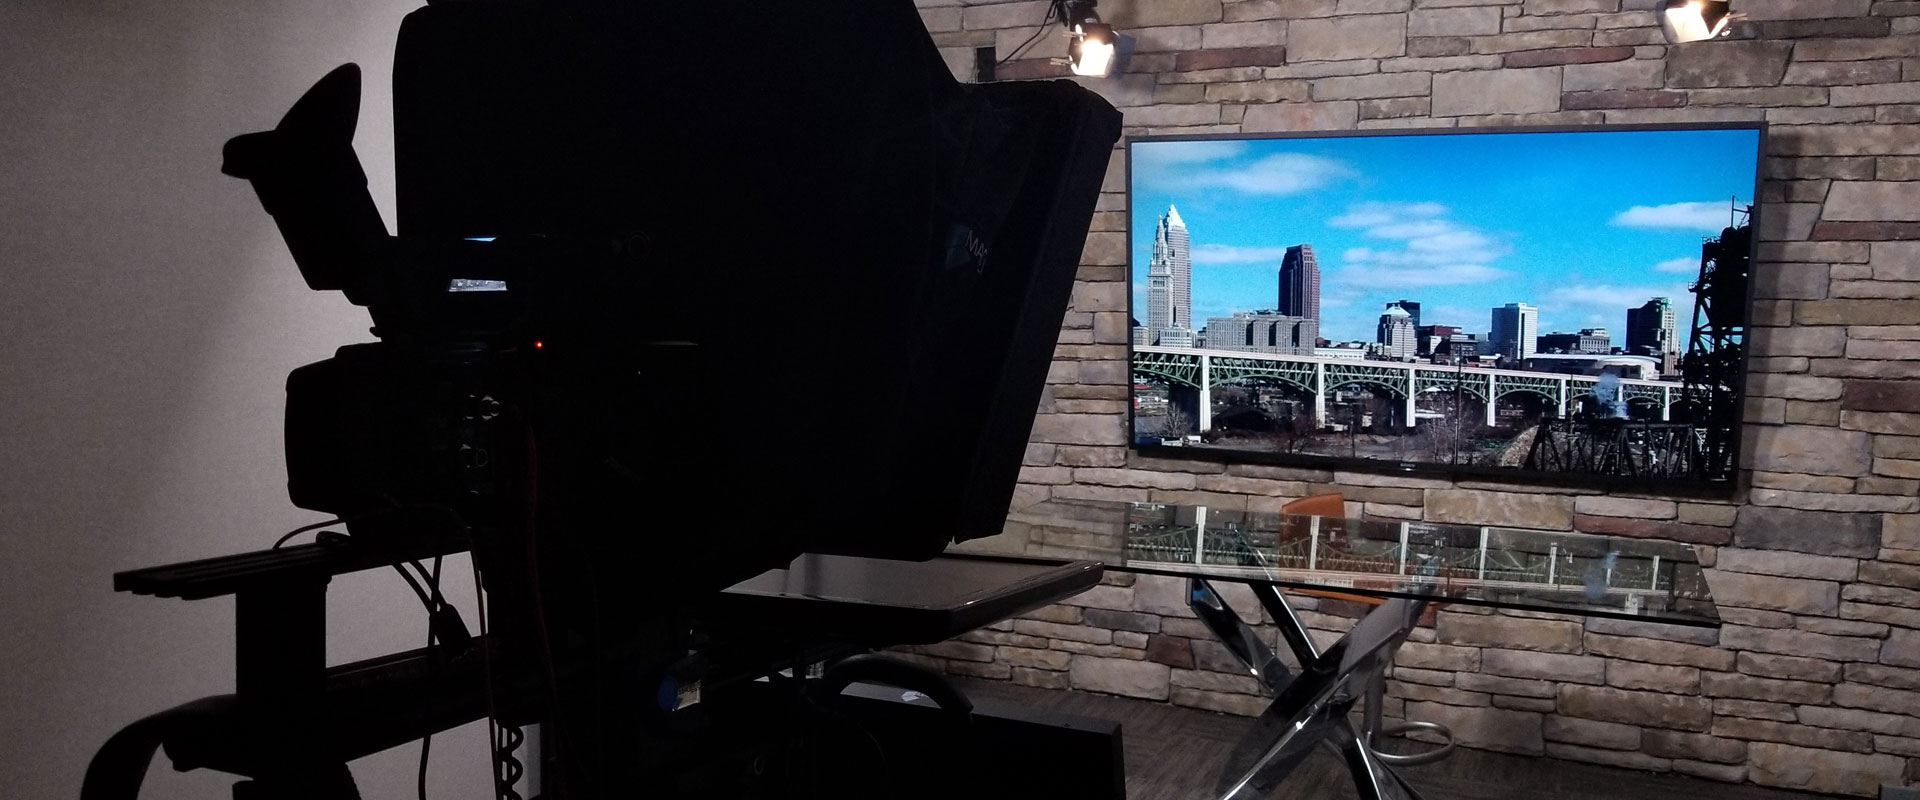 Cleveland media studio green screen teleprompter 4K cameras